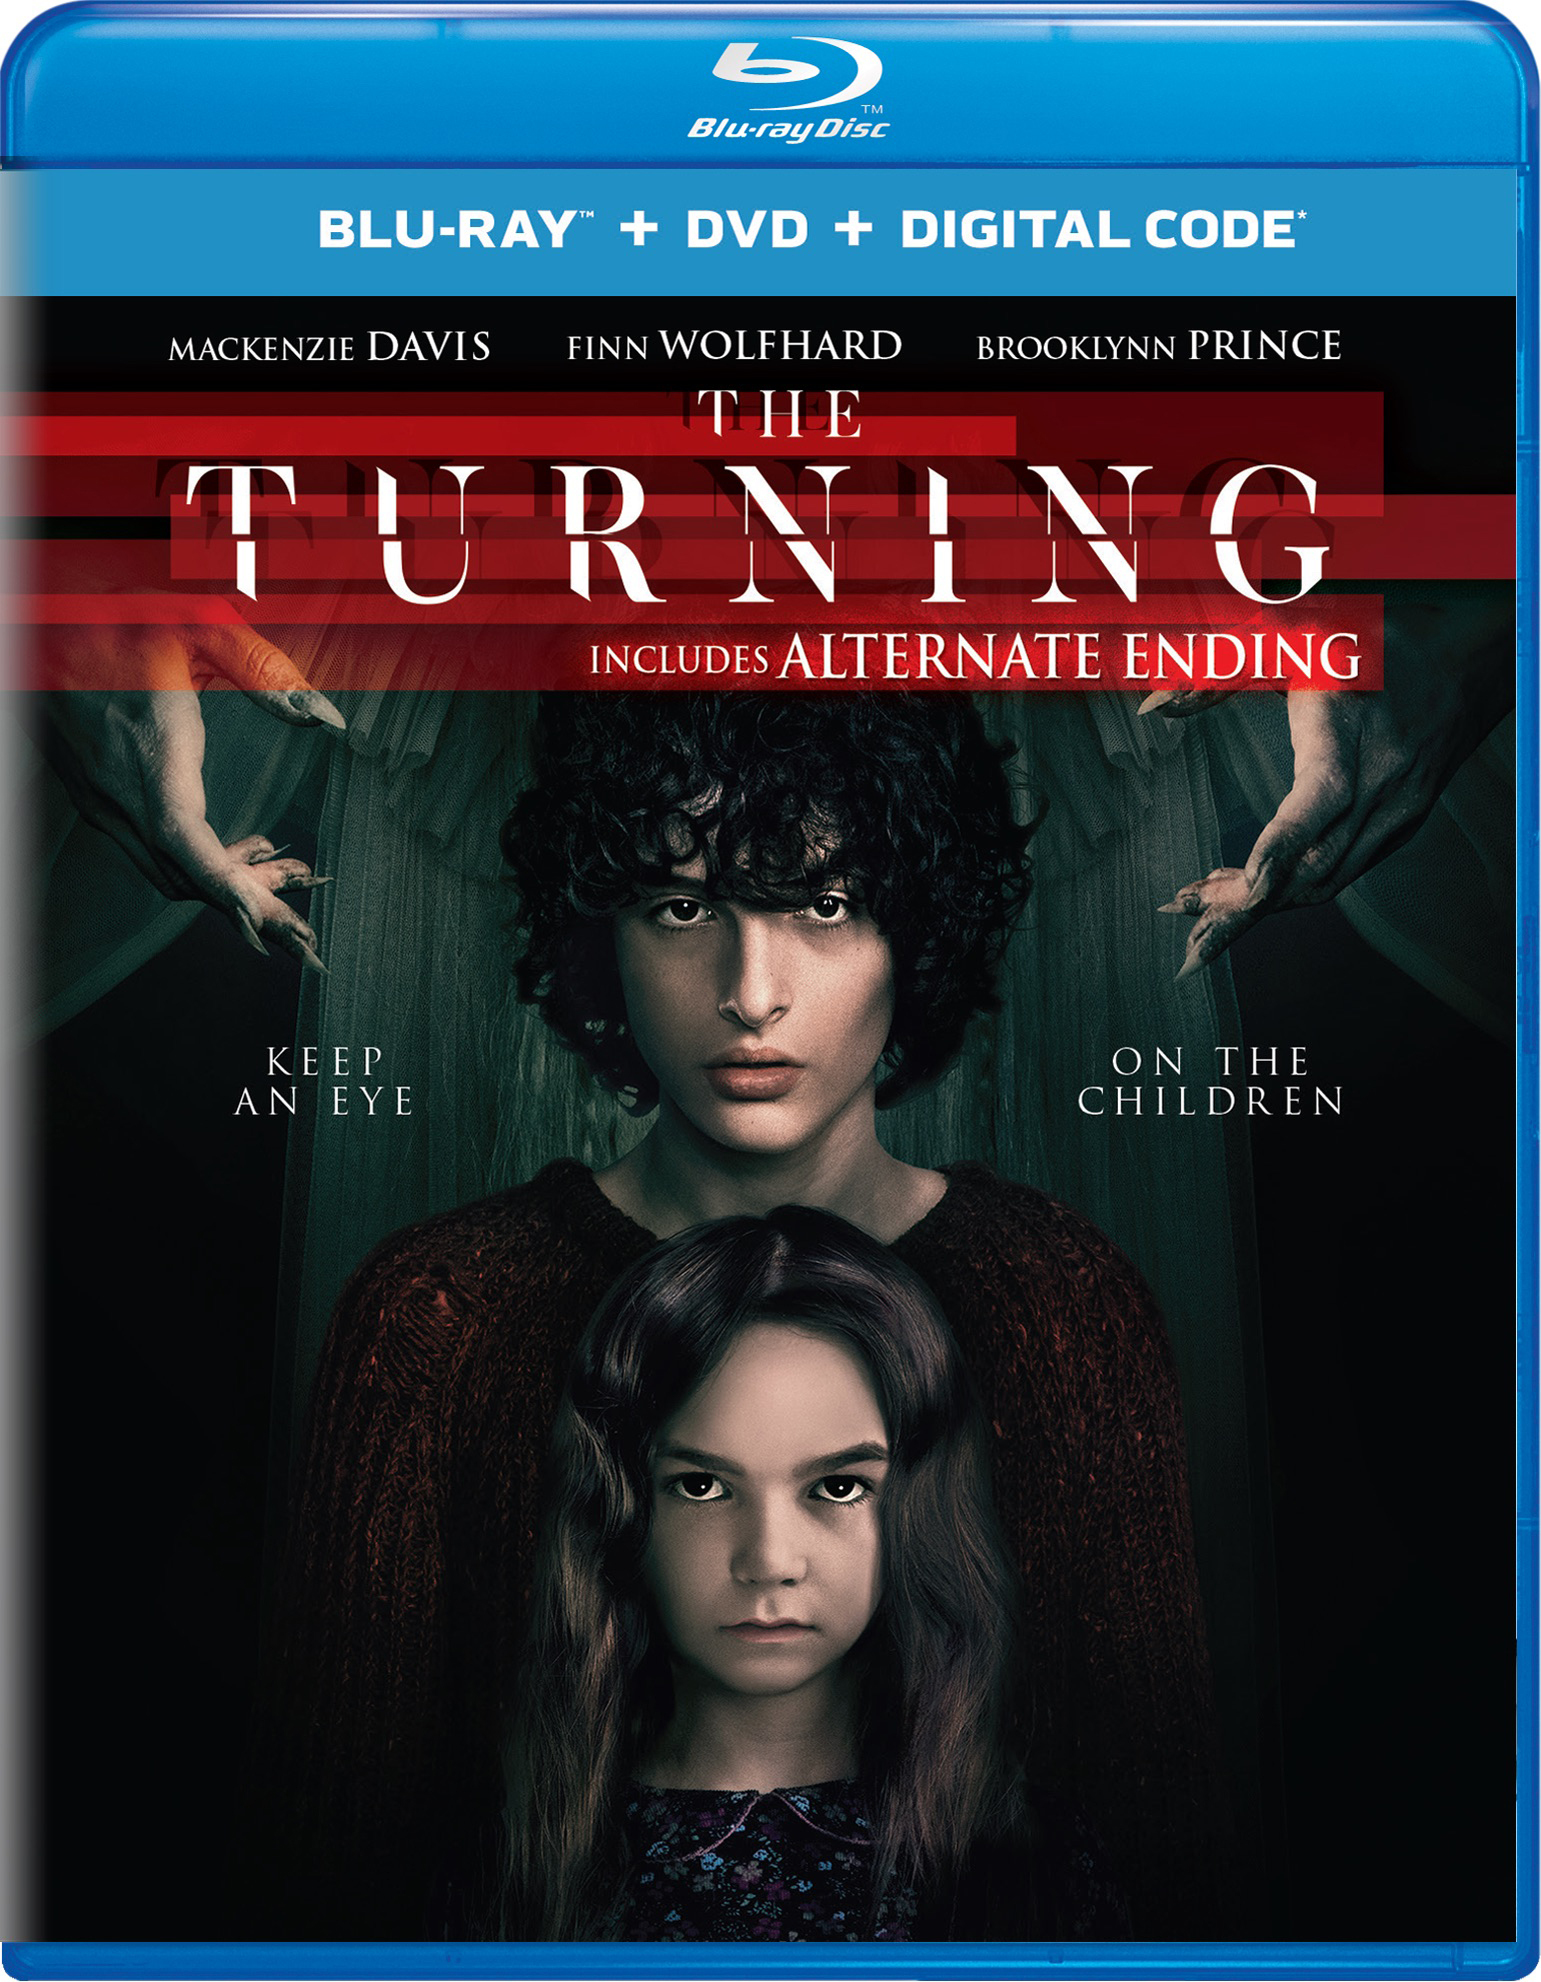 The Turning (DVD + Digital) - Blu-ray [ 2020 ]  - Horror Movies On Blu-ray - Movies On GRUV